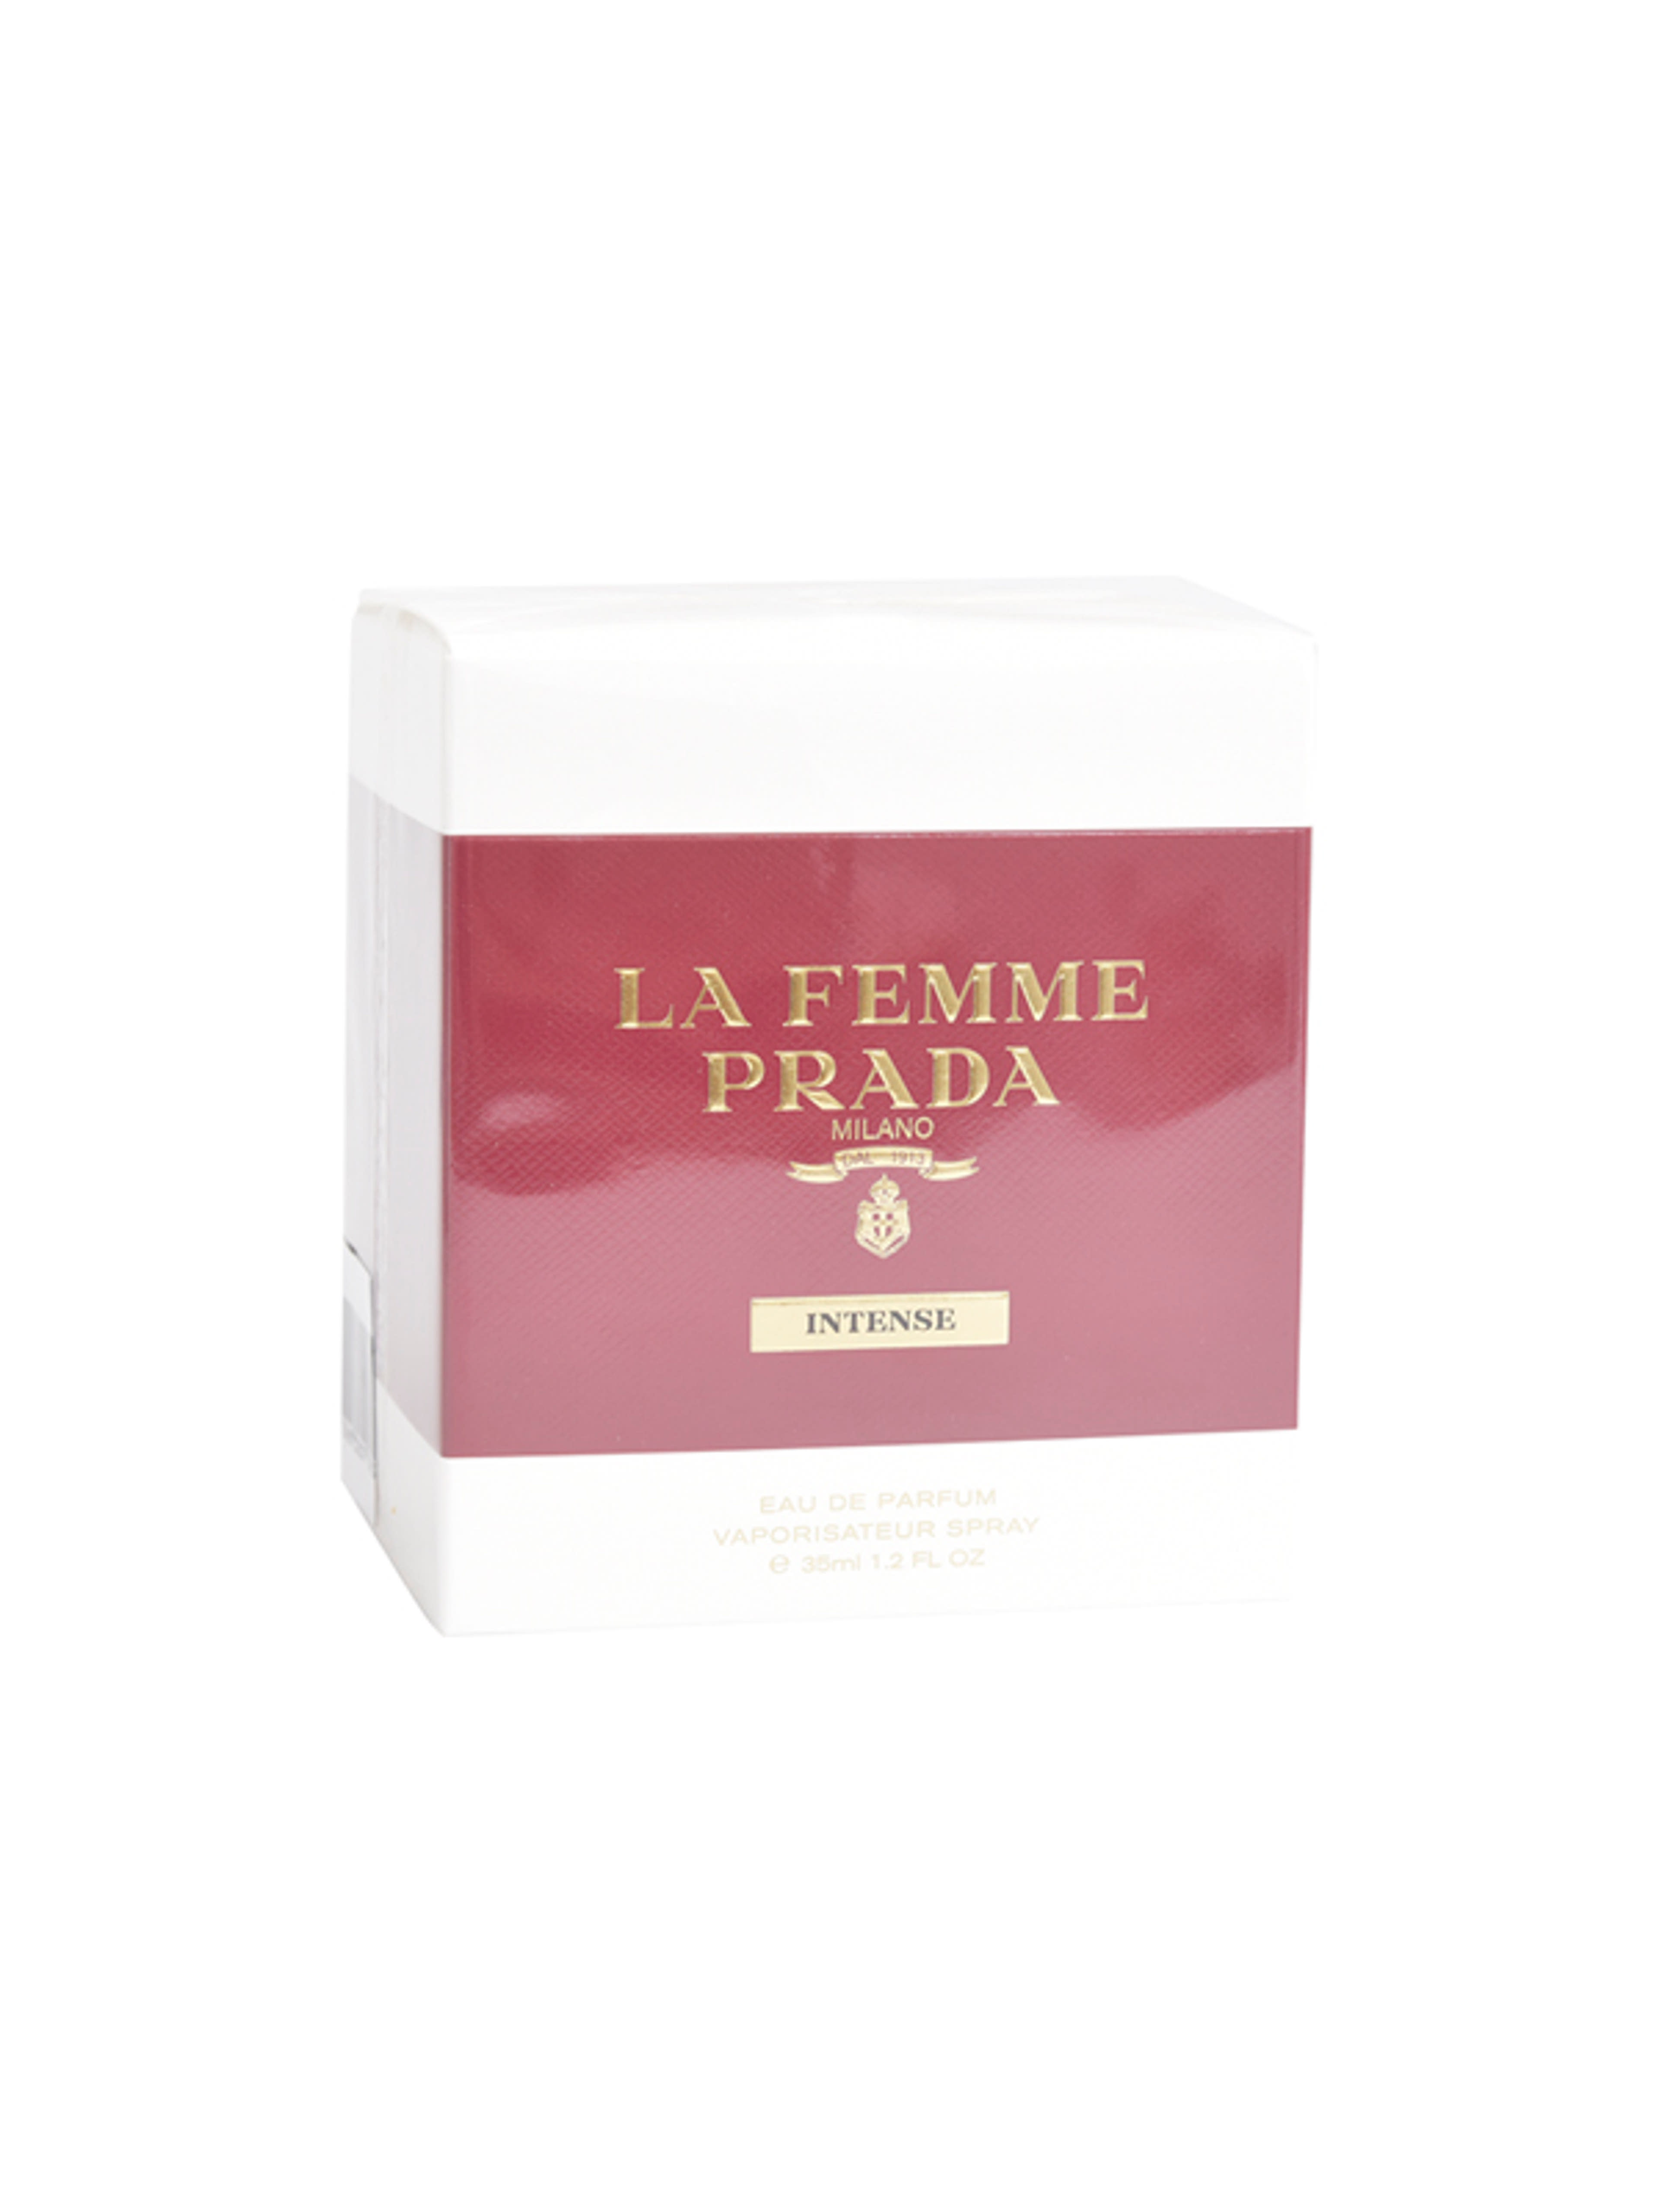 Prada La Femme Intense noi Eau de Parfume - 35 ml